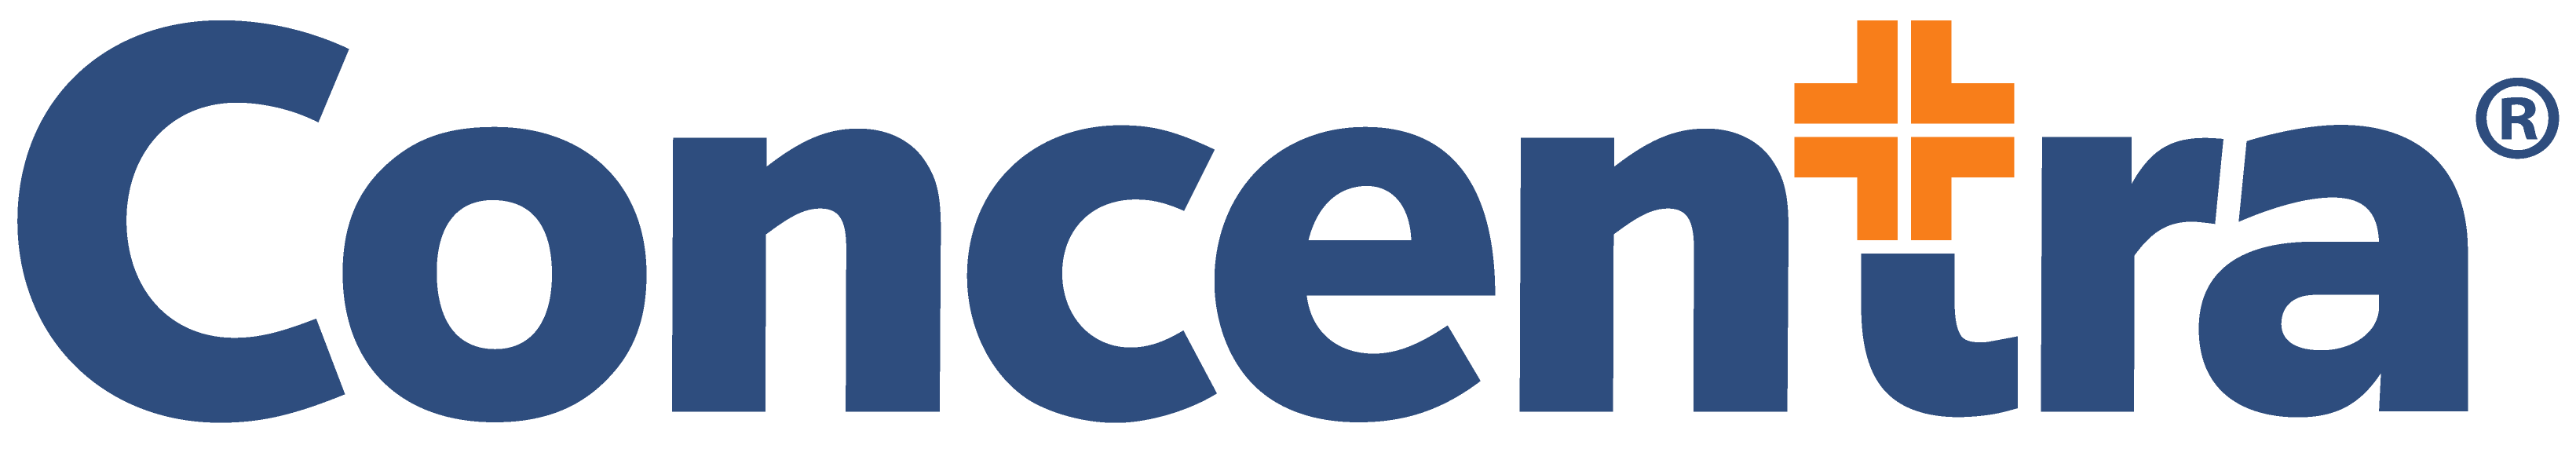 Concentra Corporate Logo 2